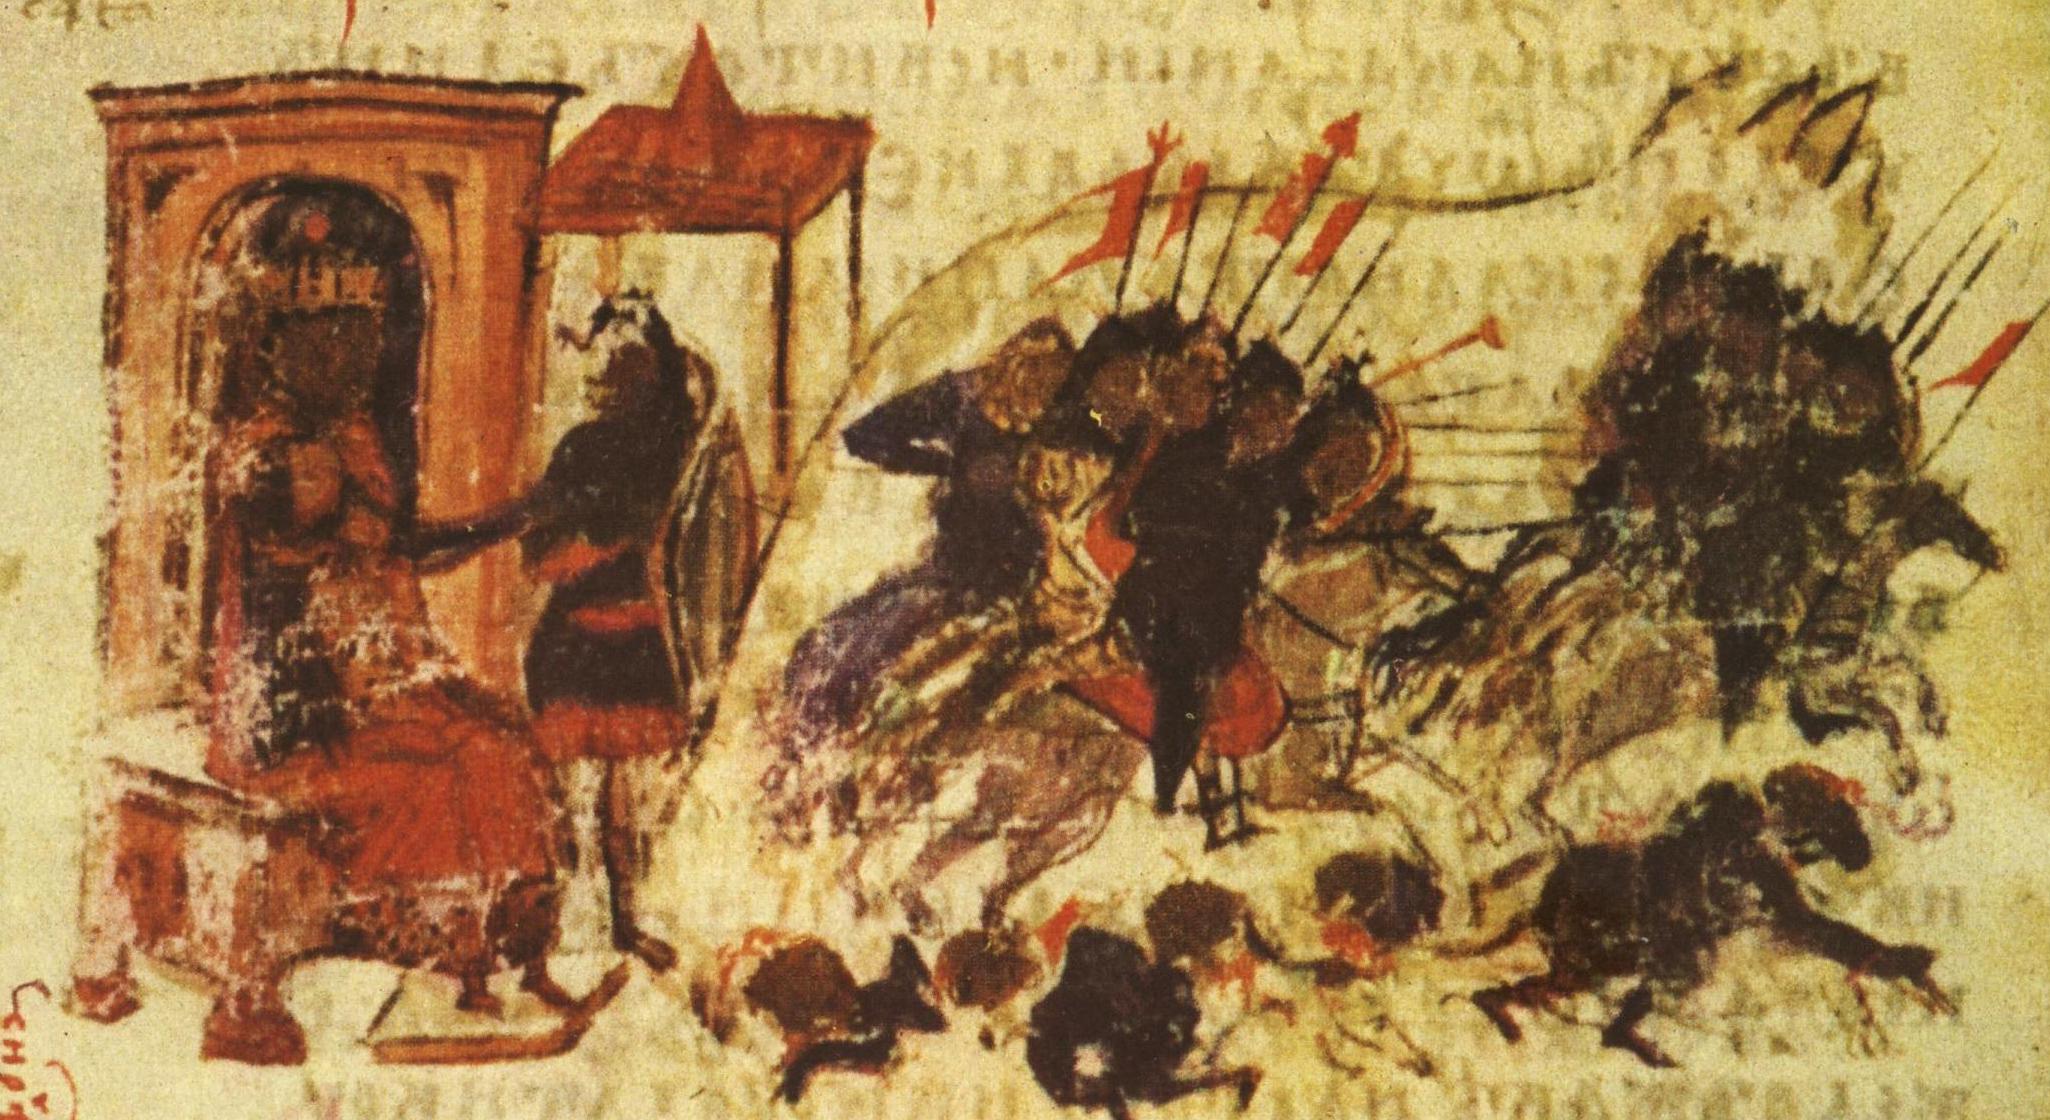 disunity in islam 634 1055 byzantium and islam